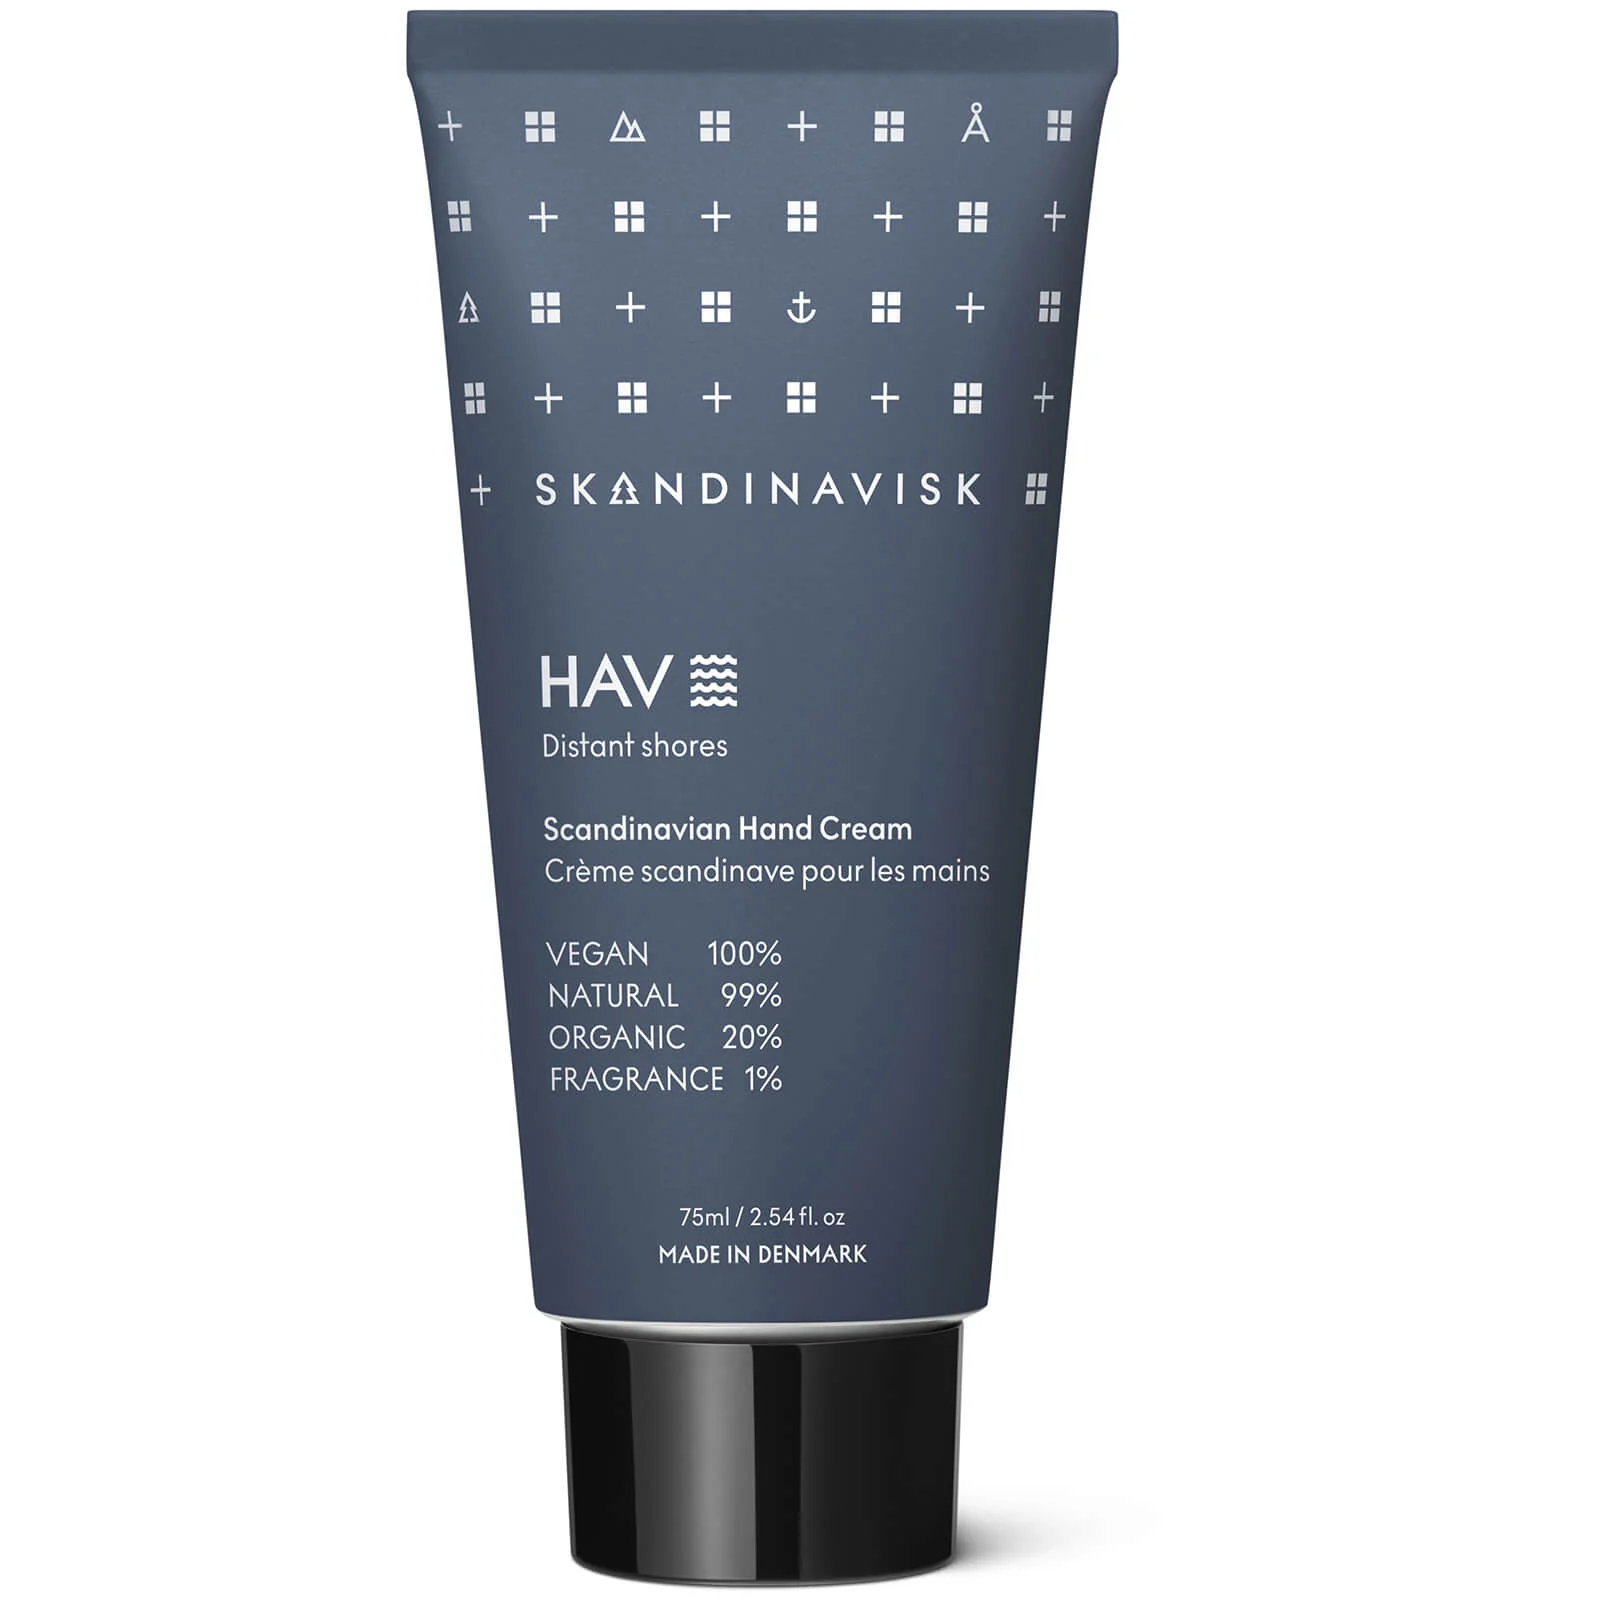 SKANDINAVISK Hand Cream - Hav - 75ml Image 1